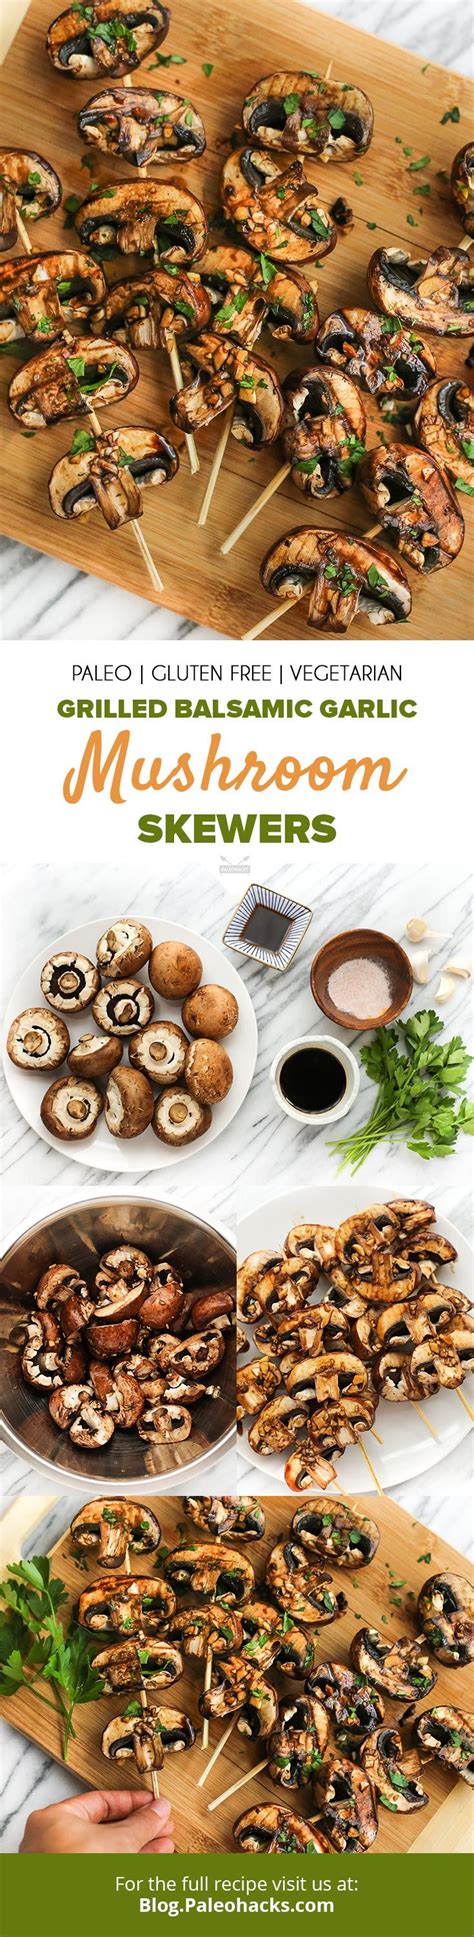 Make This Now Grilled Balsamic Garlic Mushroom Skewers Recipe